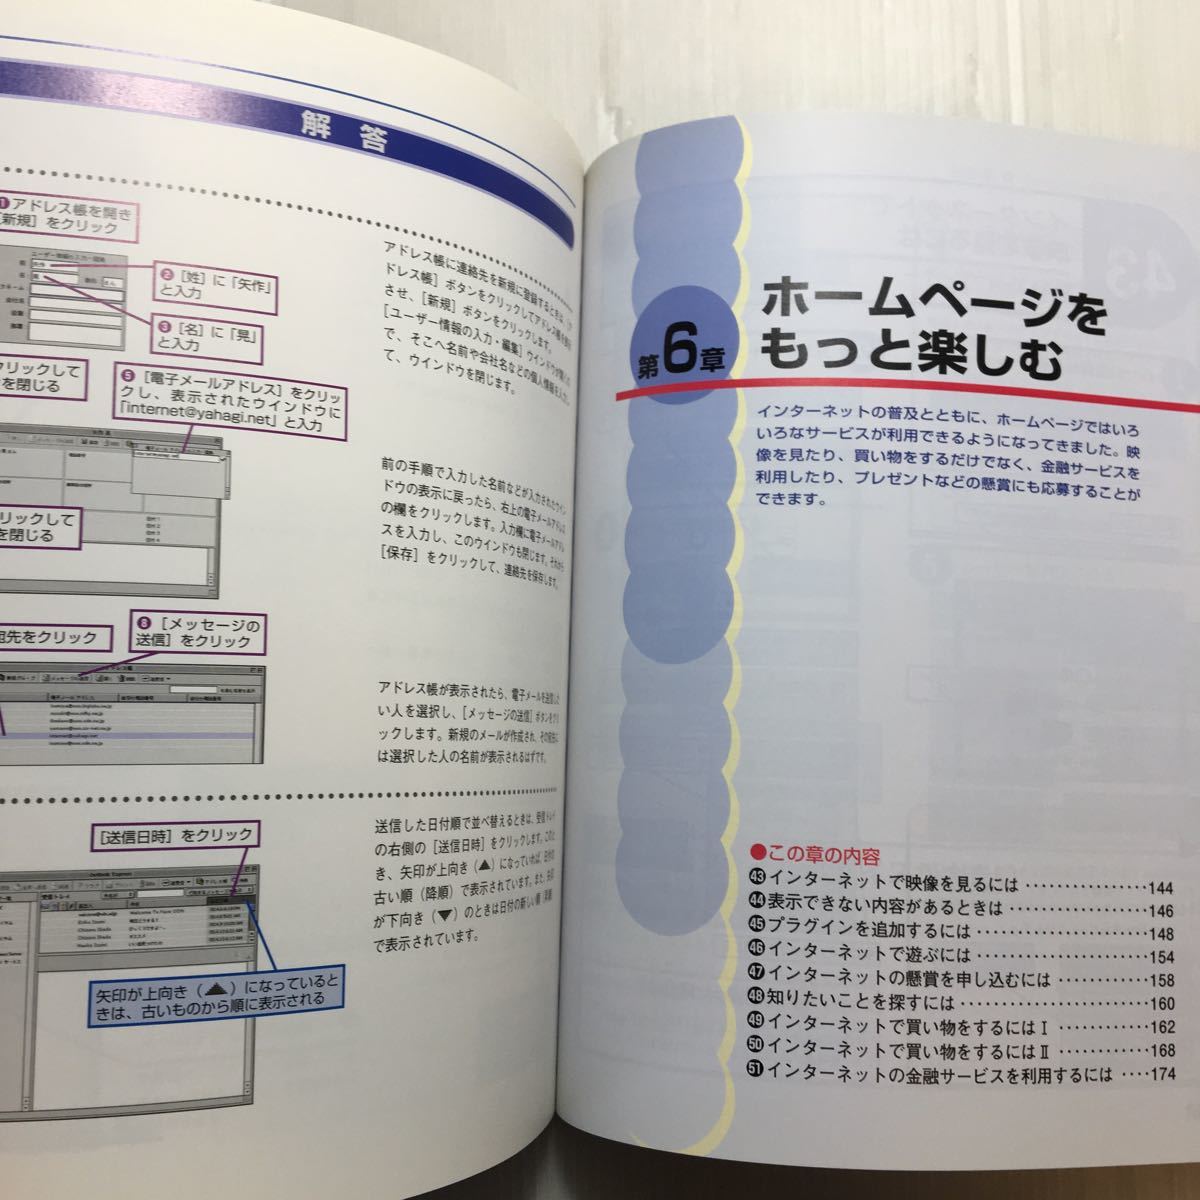 zaa-178♪できるインターネット MacOS9版 単行本 2000/5/1 法林 岳之 (編集), 矢作 晃 (編集)